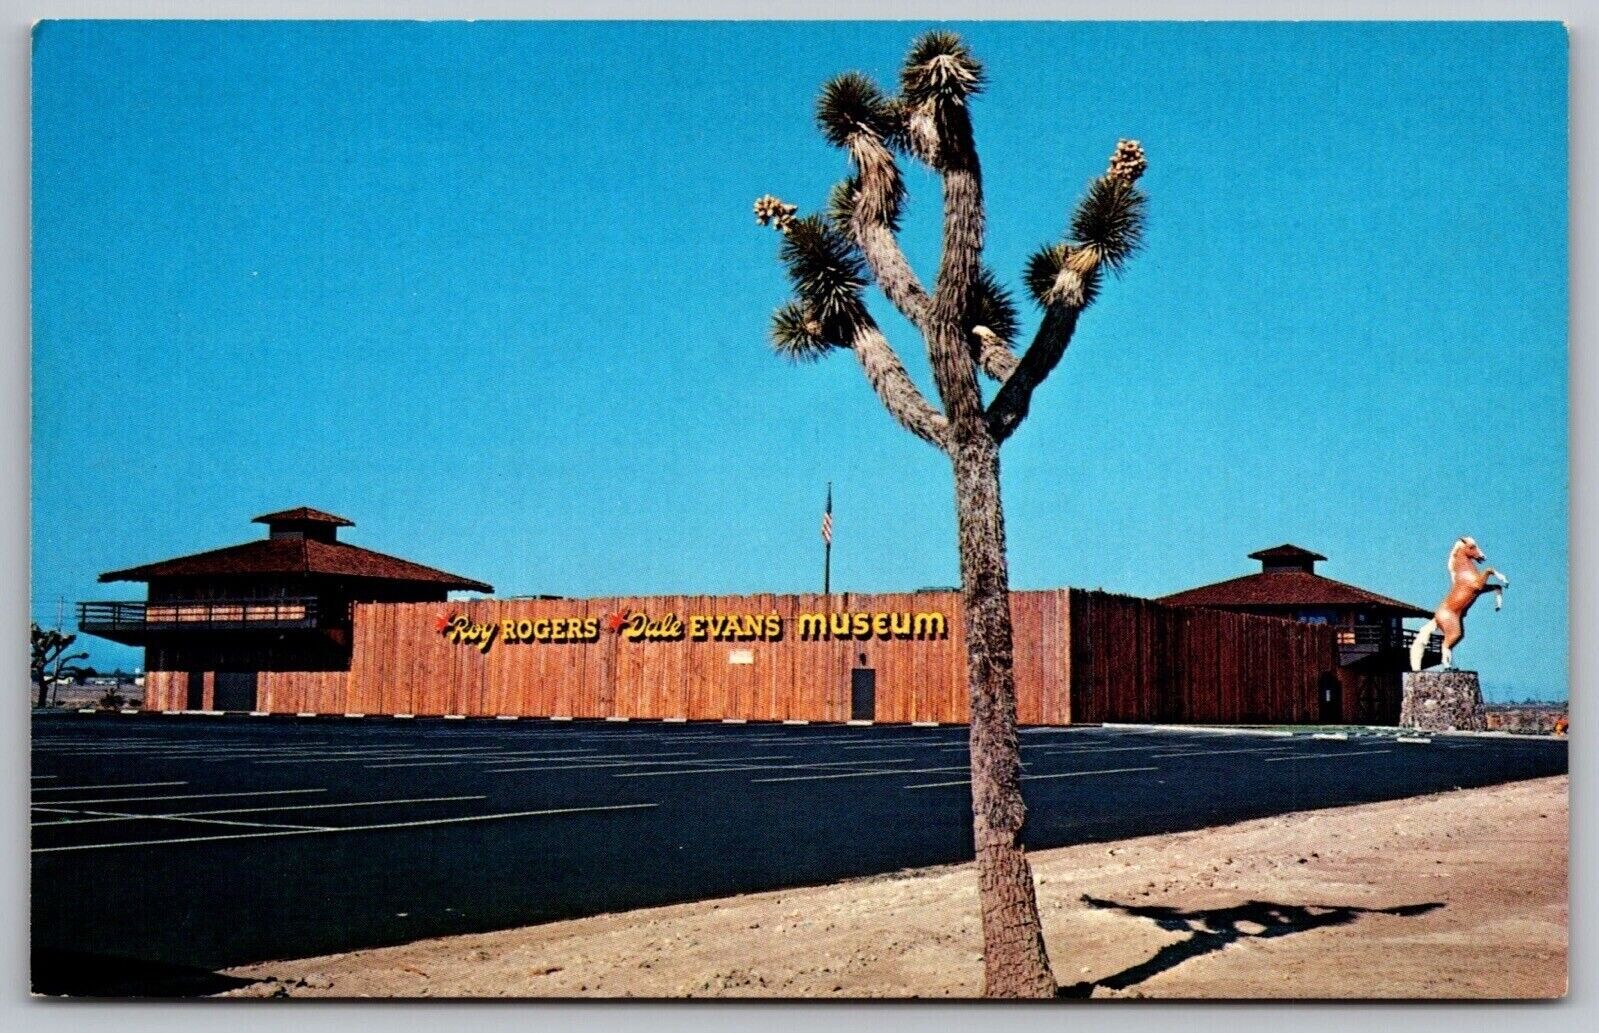 Roy Rogers Dale Evans Museum Victorville California Parking Lot View Postcard